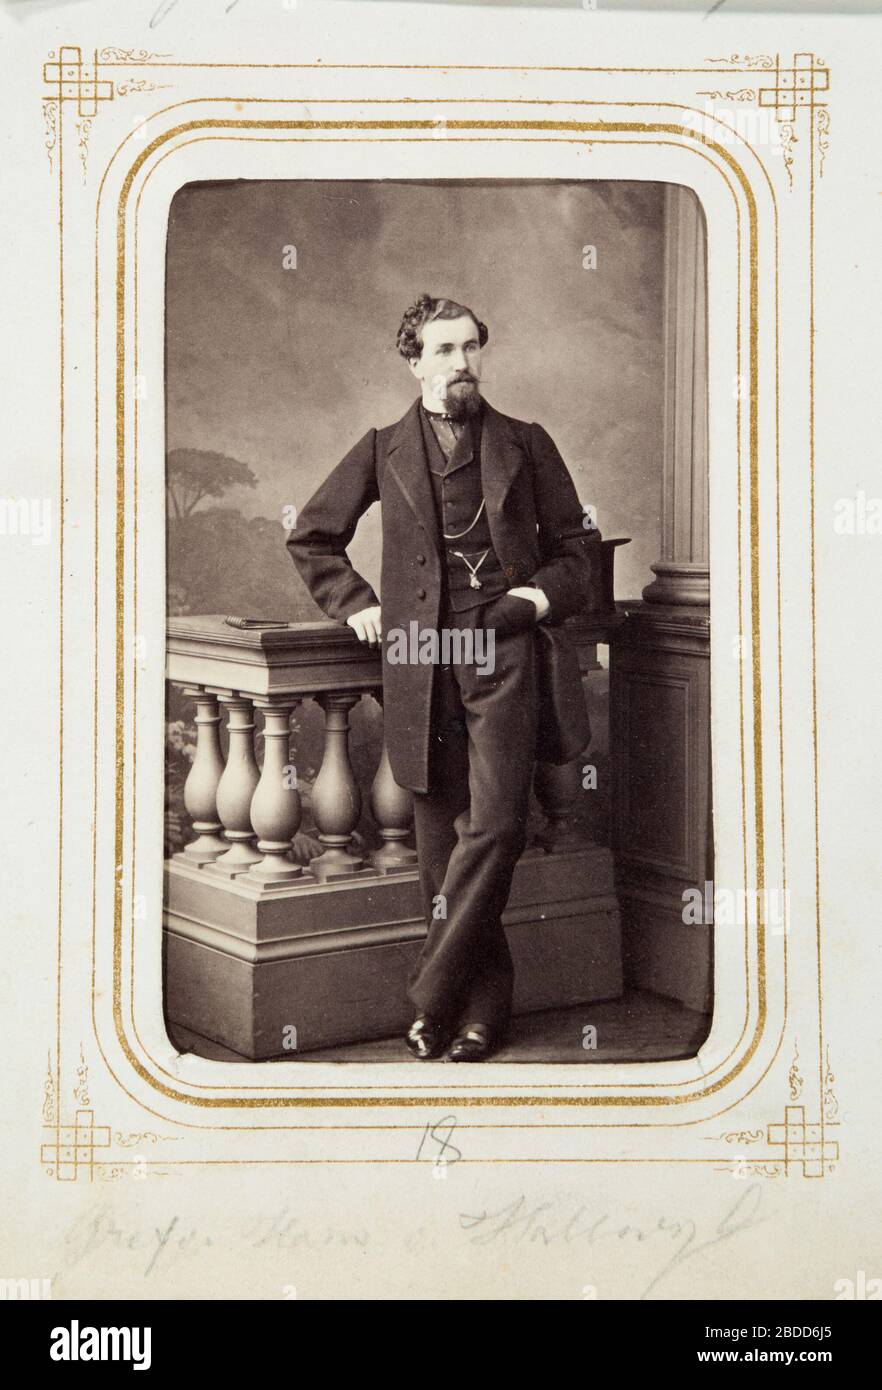 'Fotografiporträtt; Depicted person:  Hans von Hallwyl (Politiker, officer, 1835-1909) Bern - Burgberg, Schweiz - Tyskland  Svenska: Biografi. Fotografiporträtt. 101 porträtt i album.HANS VON HALLWYL. Erhållet av Johanna Kempe, f. Wallis på 1860-talet. 26,5x20,7x4 cm.; 1860s date QS:P571,+1860-00-00T00:00:00Z/8; LSH 107810 (hm dig18964); ' Stock Photo